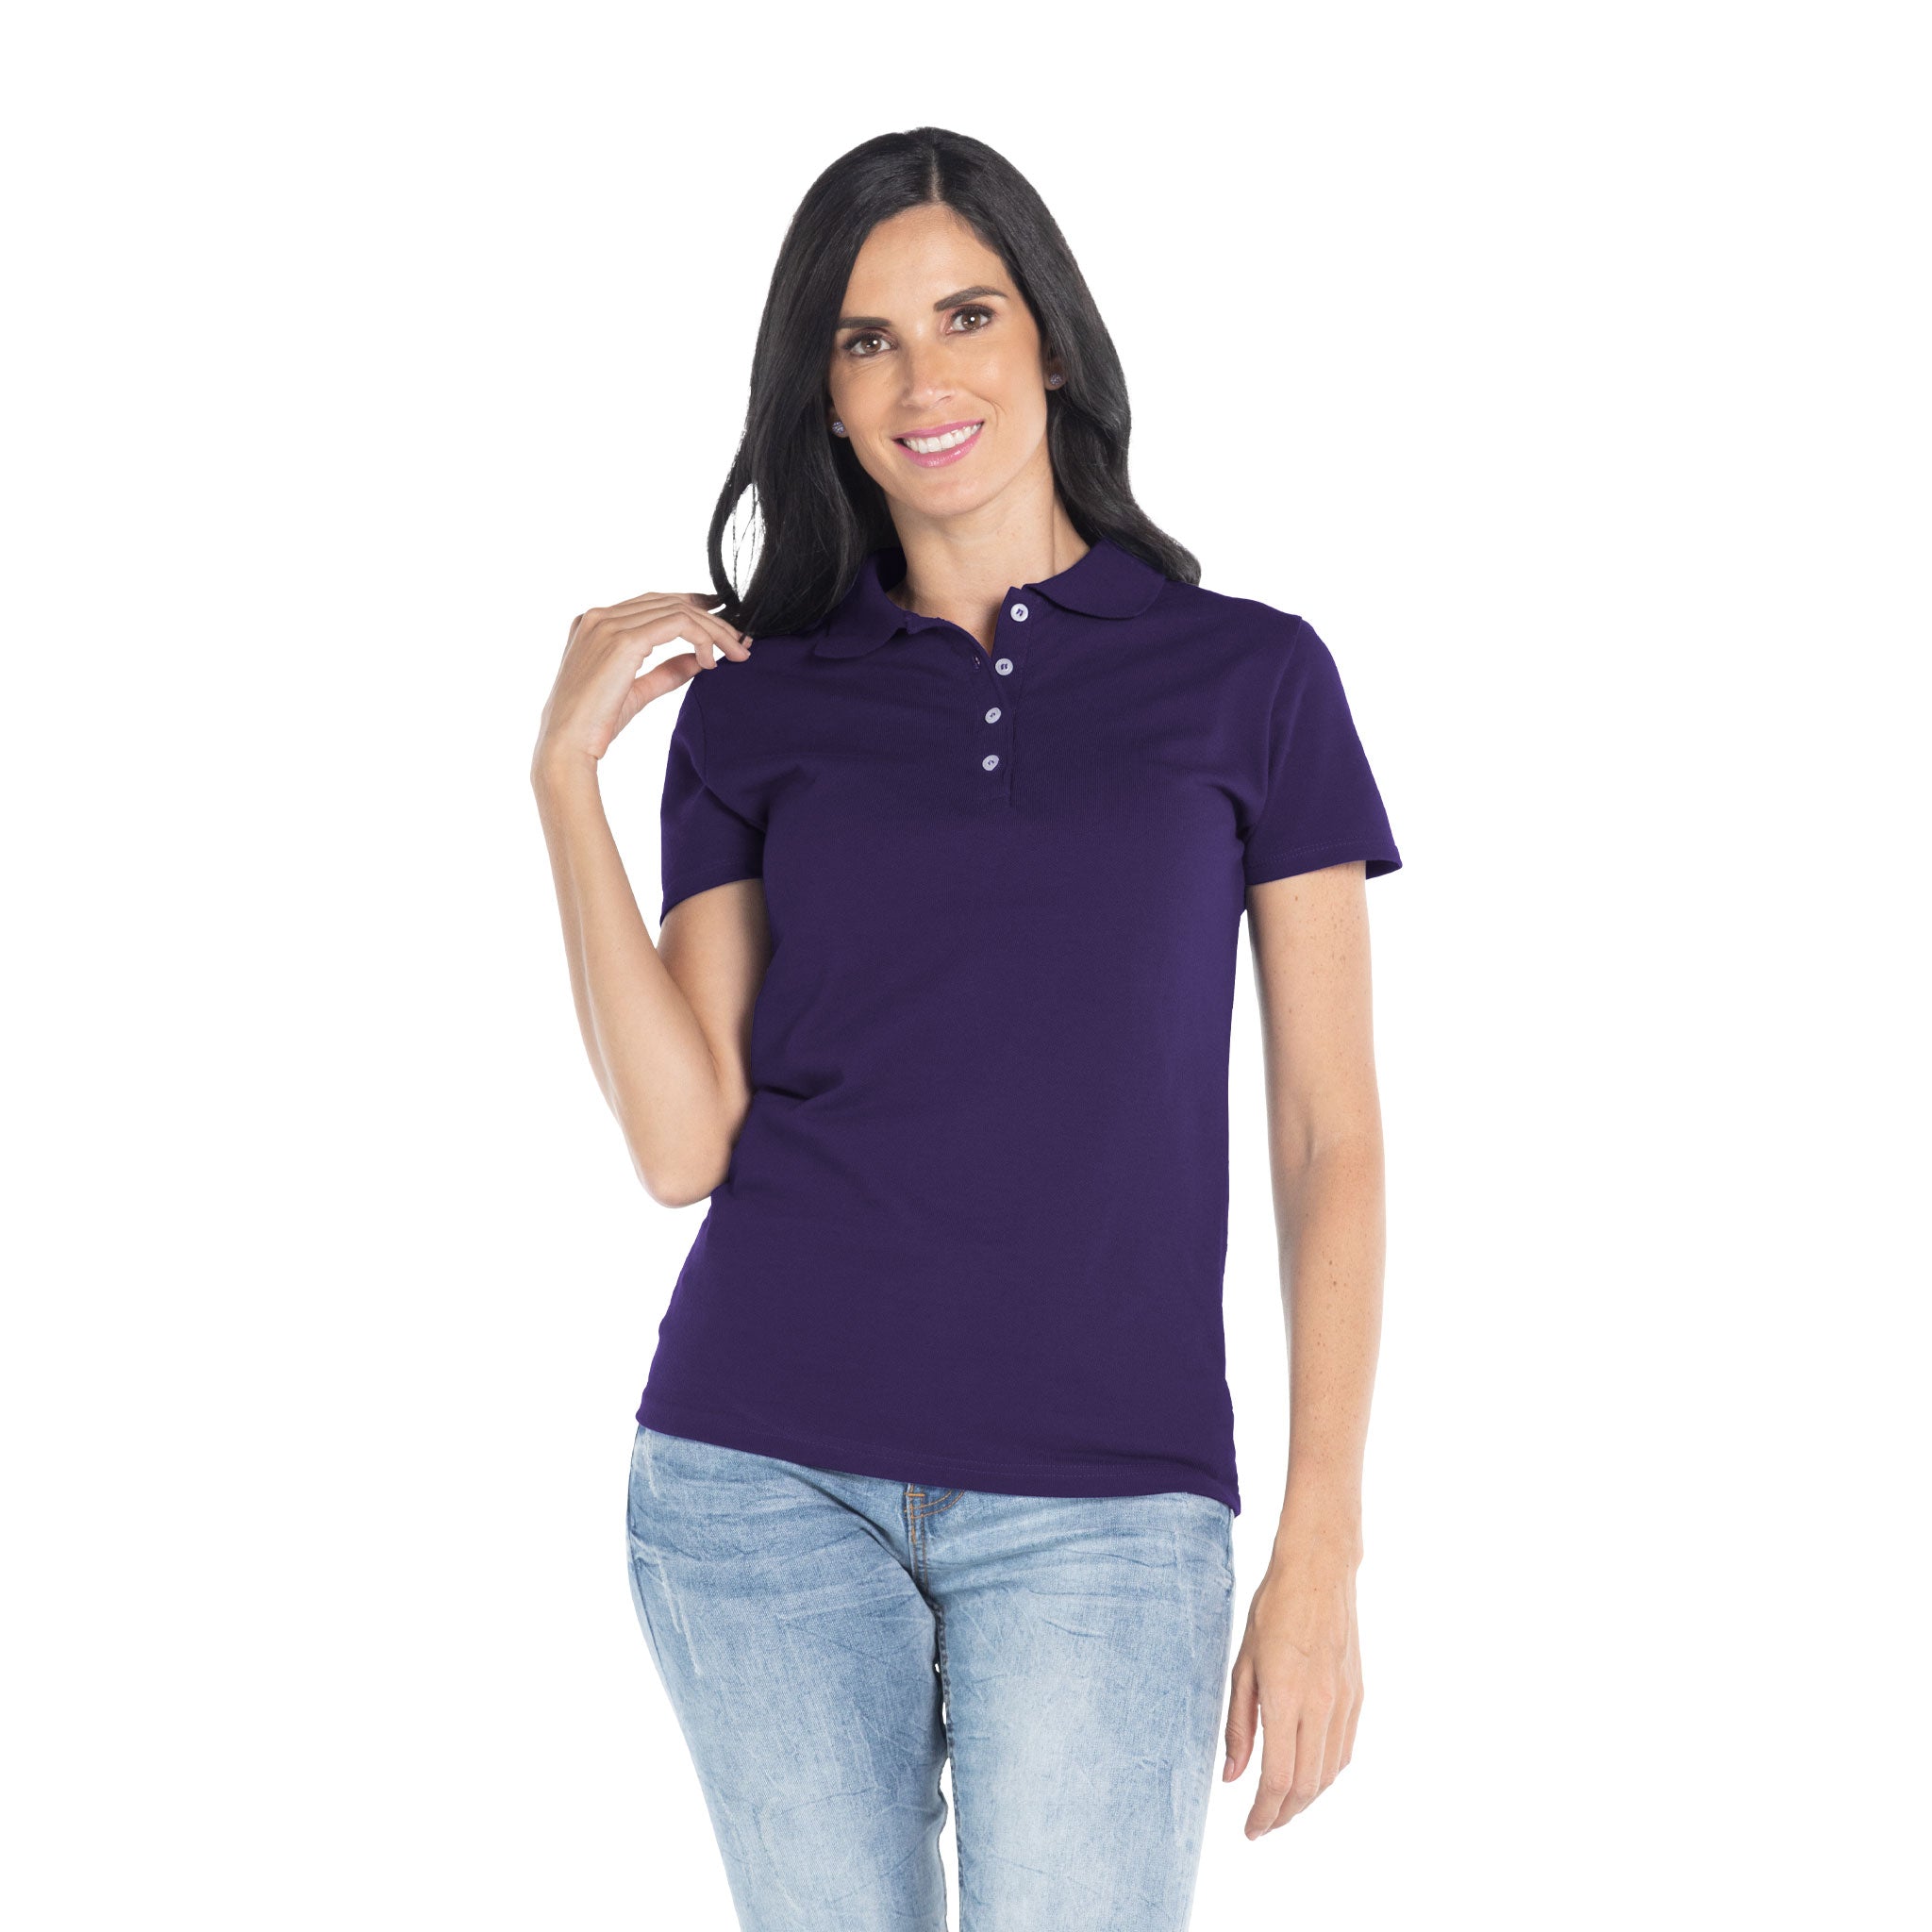 USA Silhouette Yazbek Women\'s (Purple) Mint Sport – Shirt